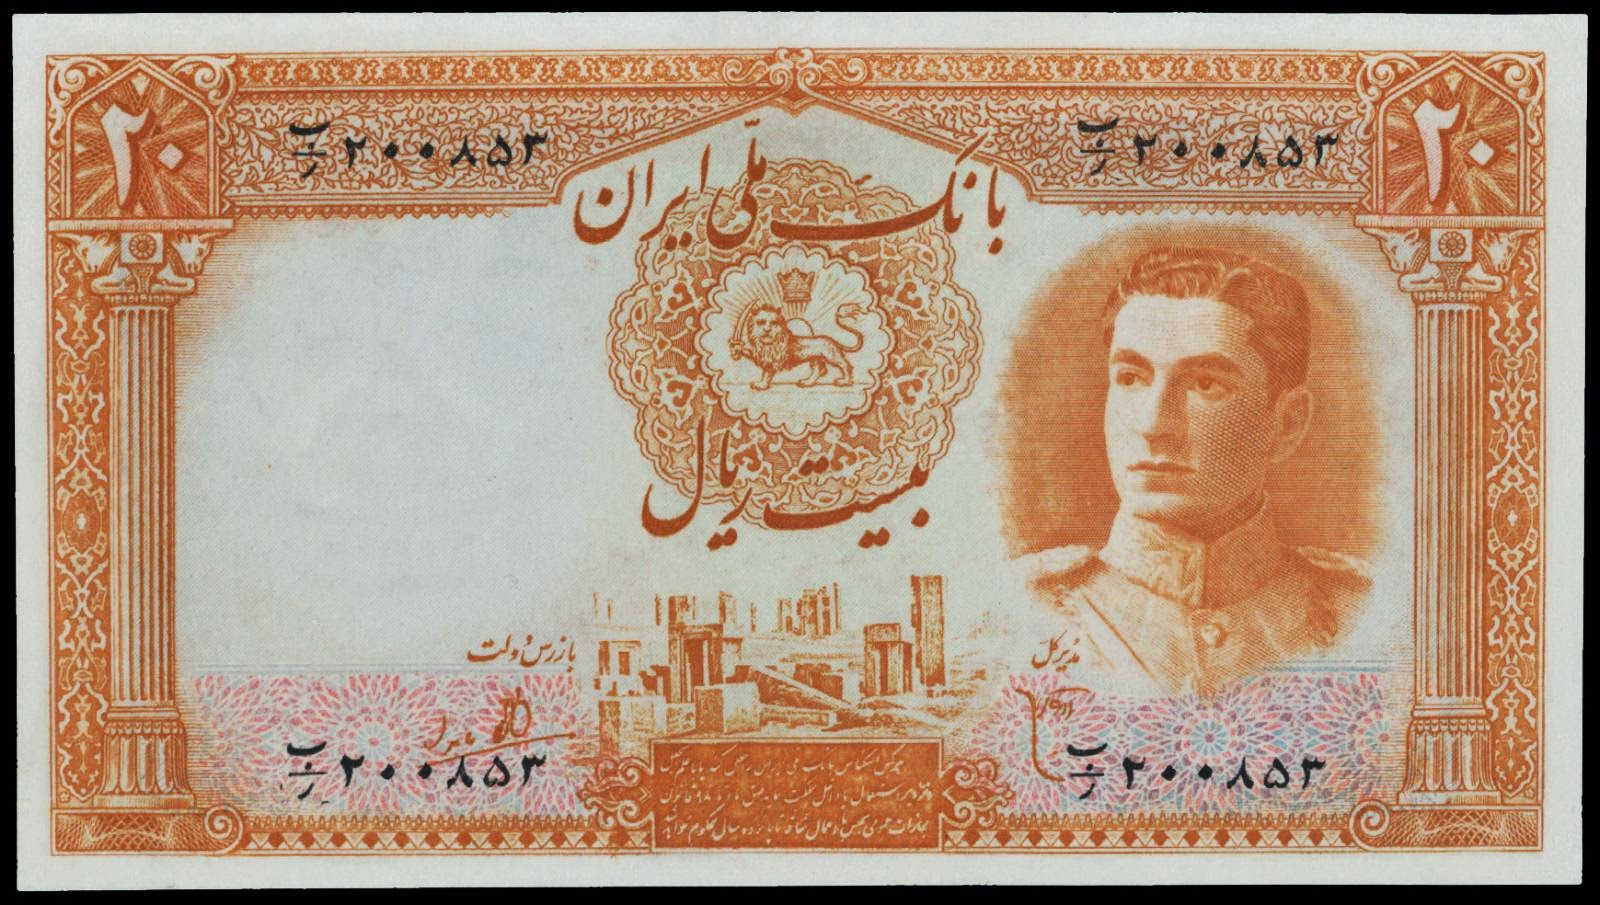 Iran 20 Rials banknote 1944 Mohammad Reza Shah Pahlavi